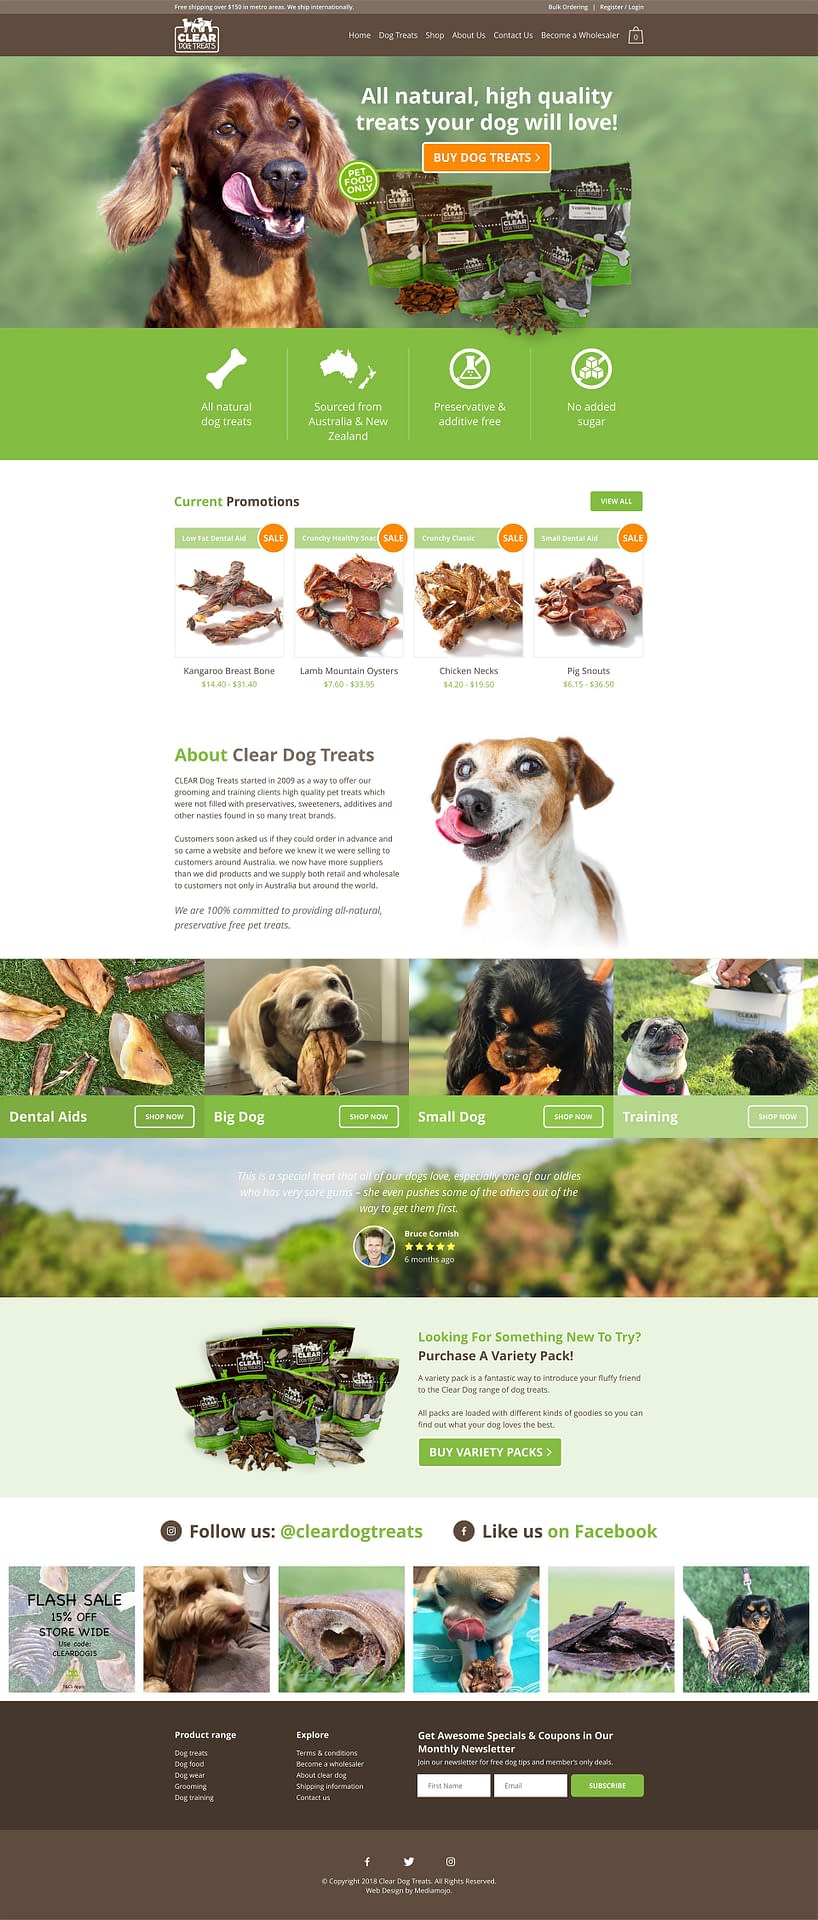 Clear dog treats website design